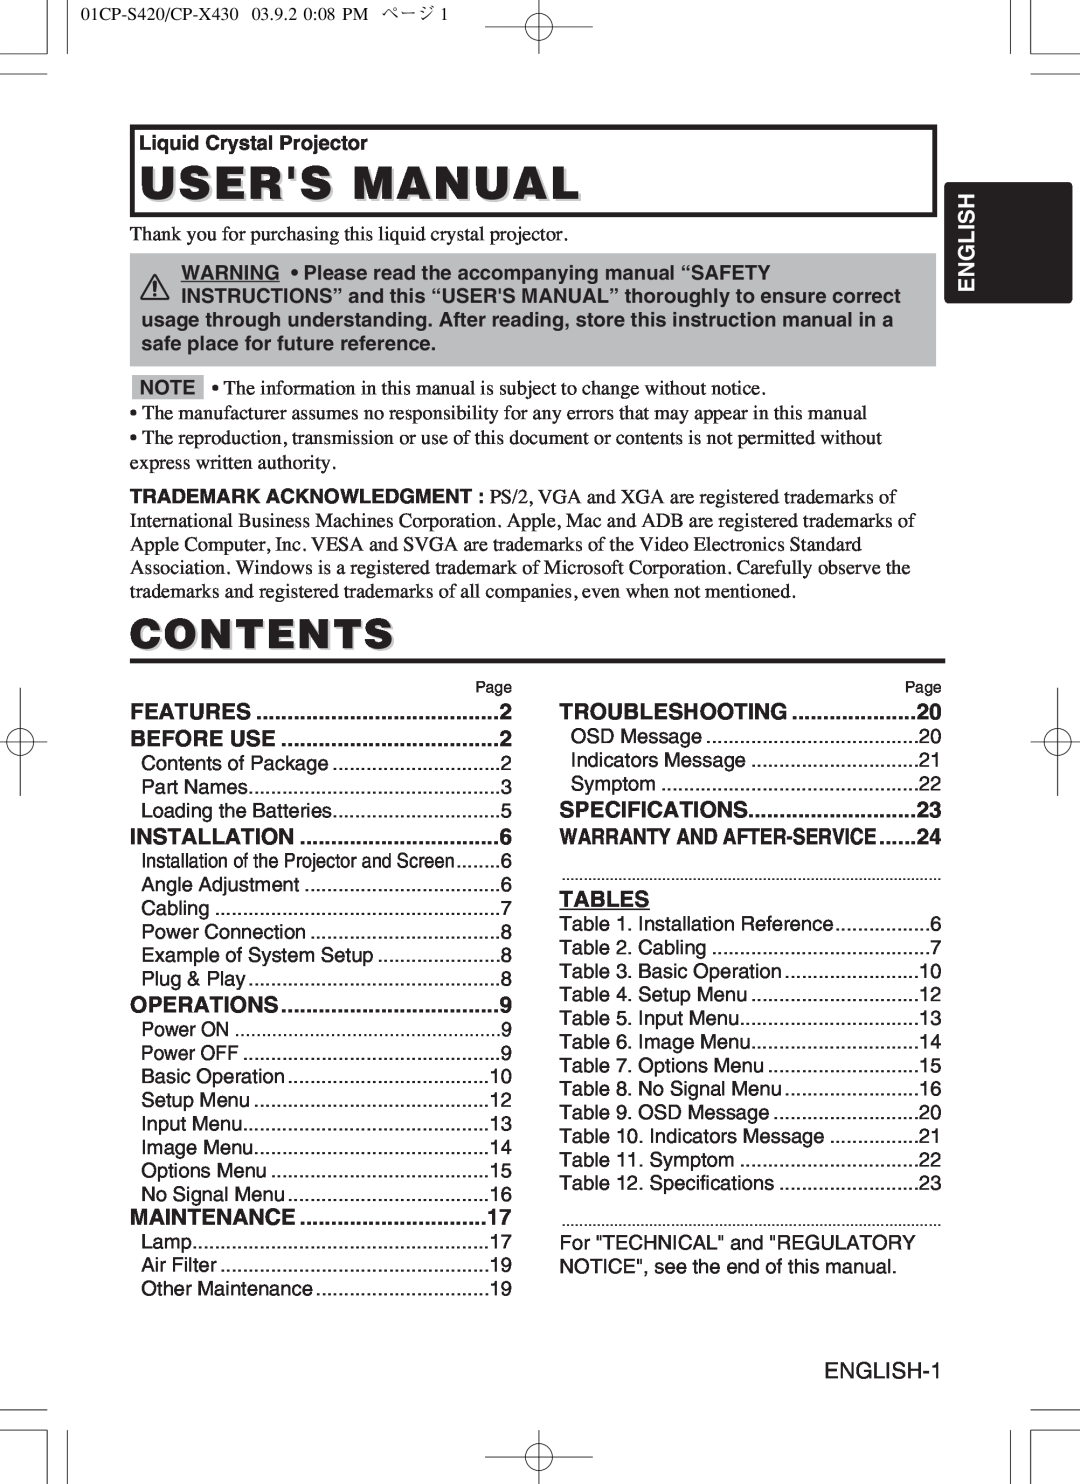 Hitachi CP-X430WA, CP-S420WA user manual Contents, Tables, English 